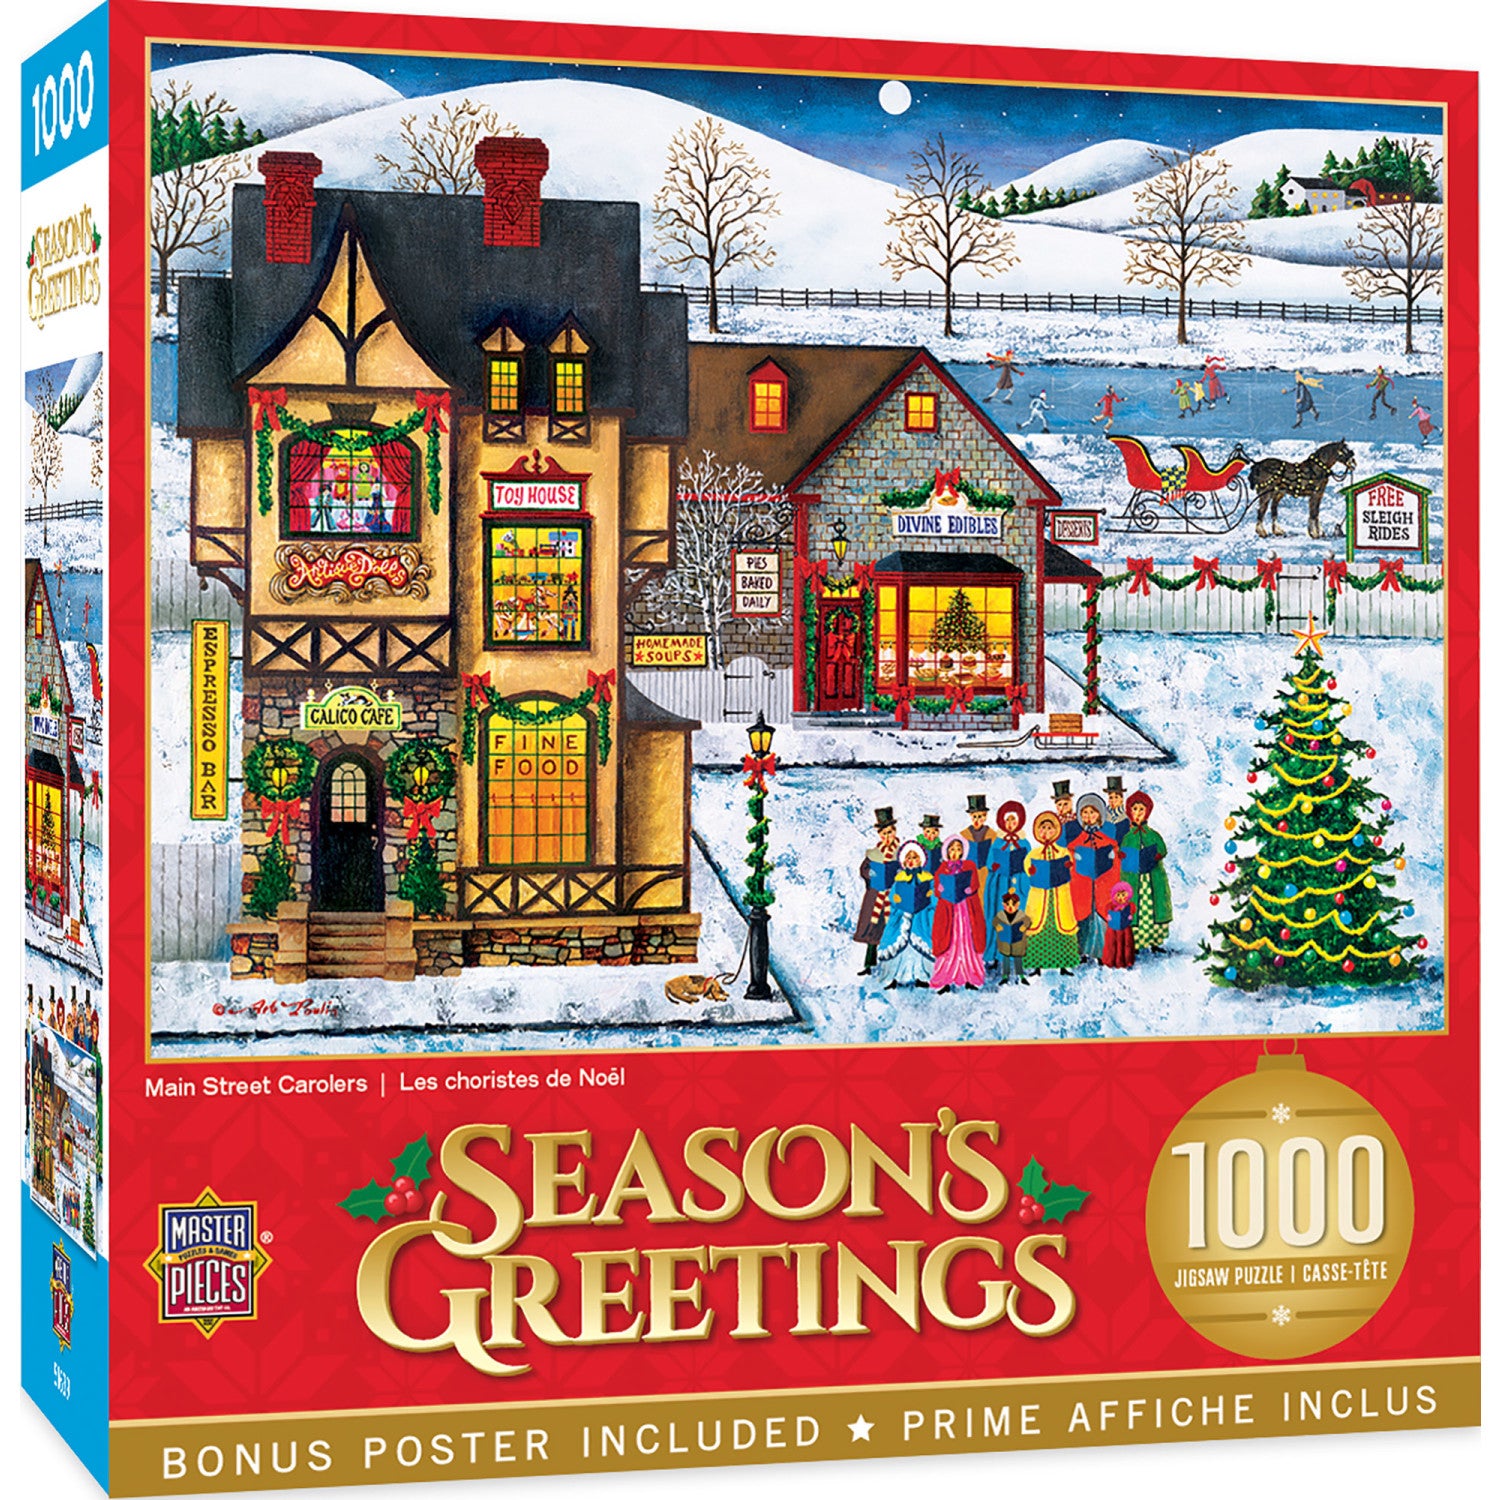 Season's Greetings - Main Street Carolers 1000 Piece Jigsaw Puzzle